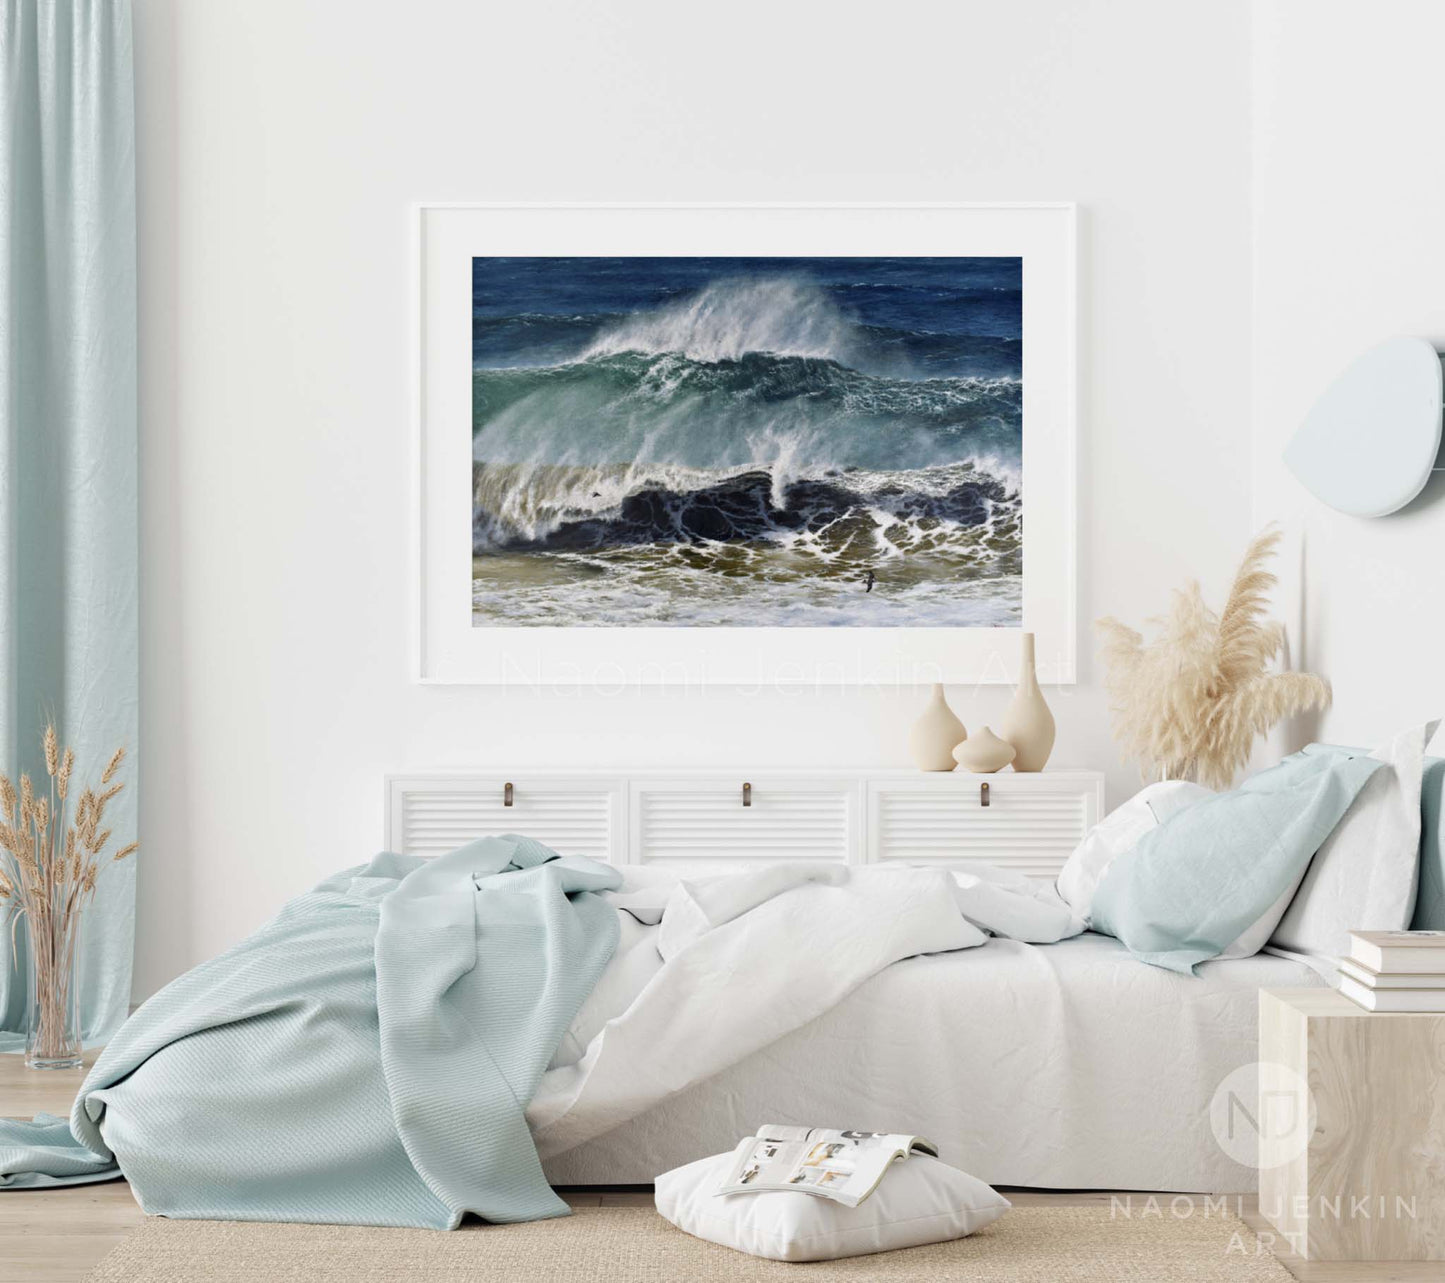 Ocean print 'Raging Seas' by seascape artist Naomi Jenkin Art in a white frame and bedroom setting. 